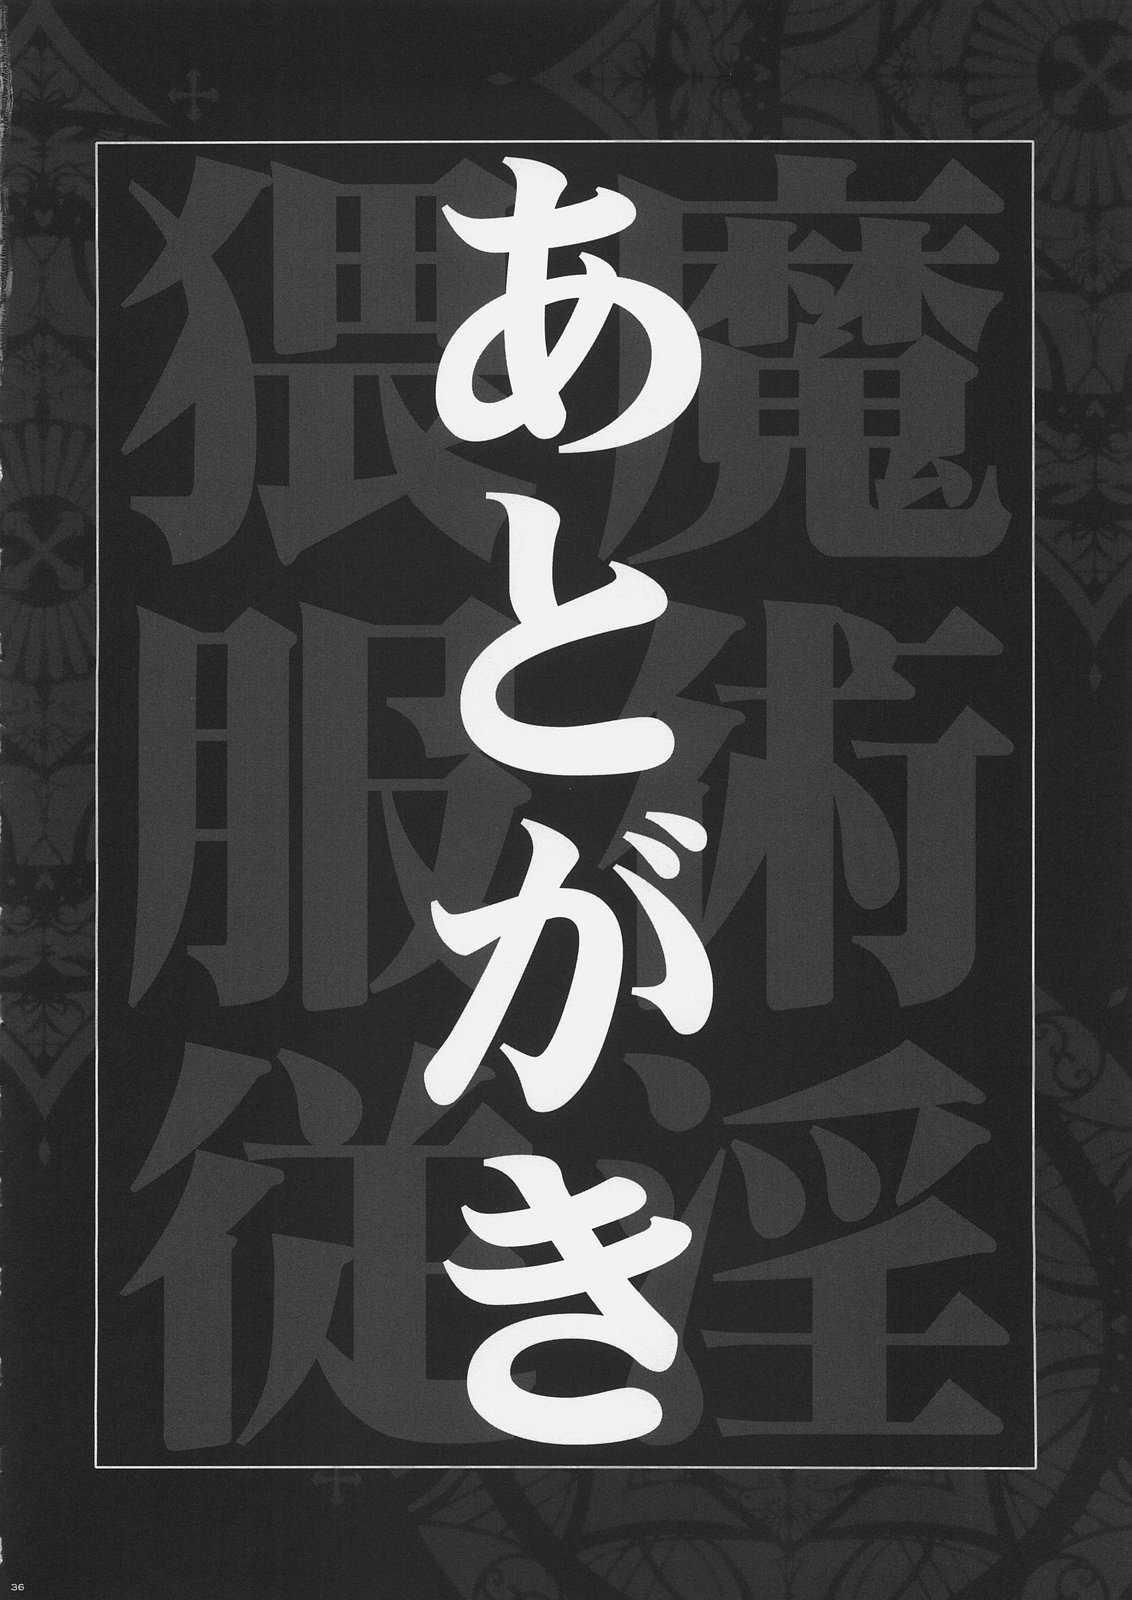 [Yan-Yam] Majutsu Inwai Fukujuu (Fate/hollow ataraxia) [Yan-Yam] 魔術淫猥服従(Fate/hollow ataraxia)